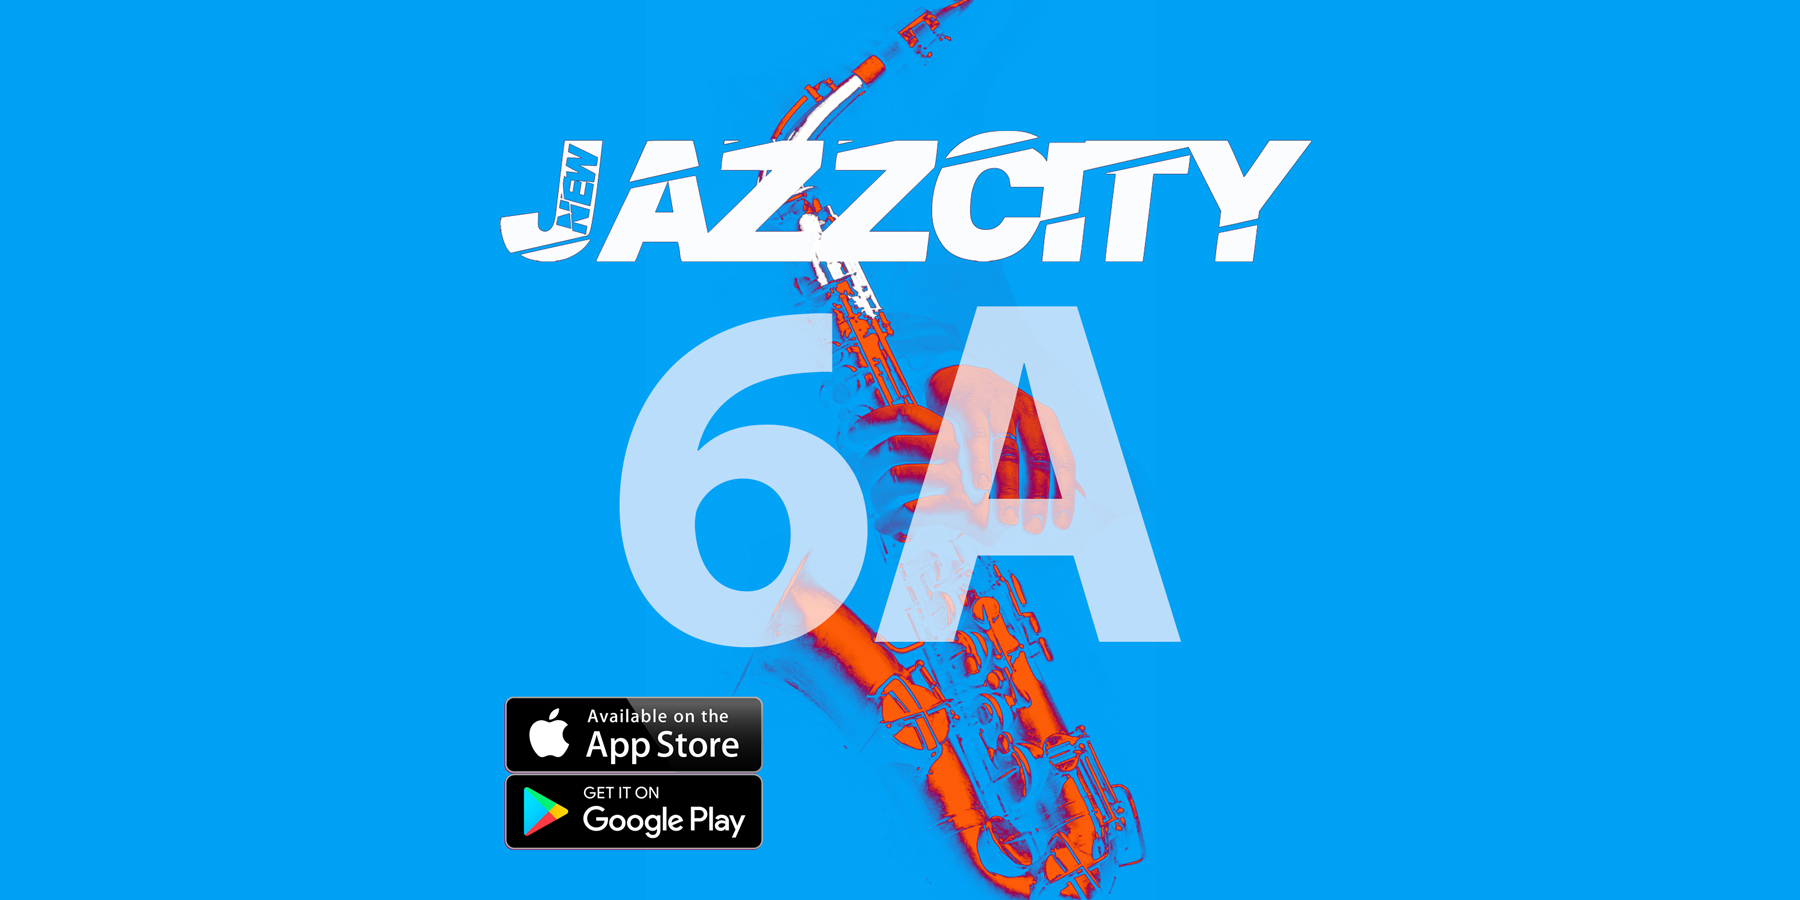 New Jazz City 6A